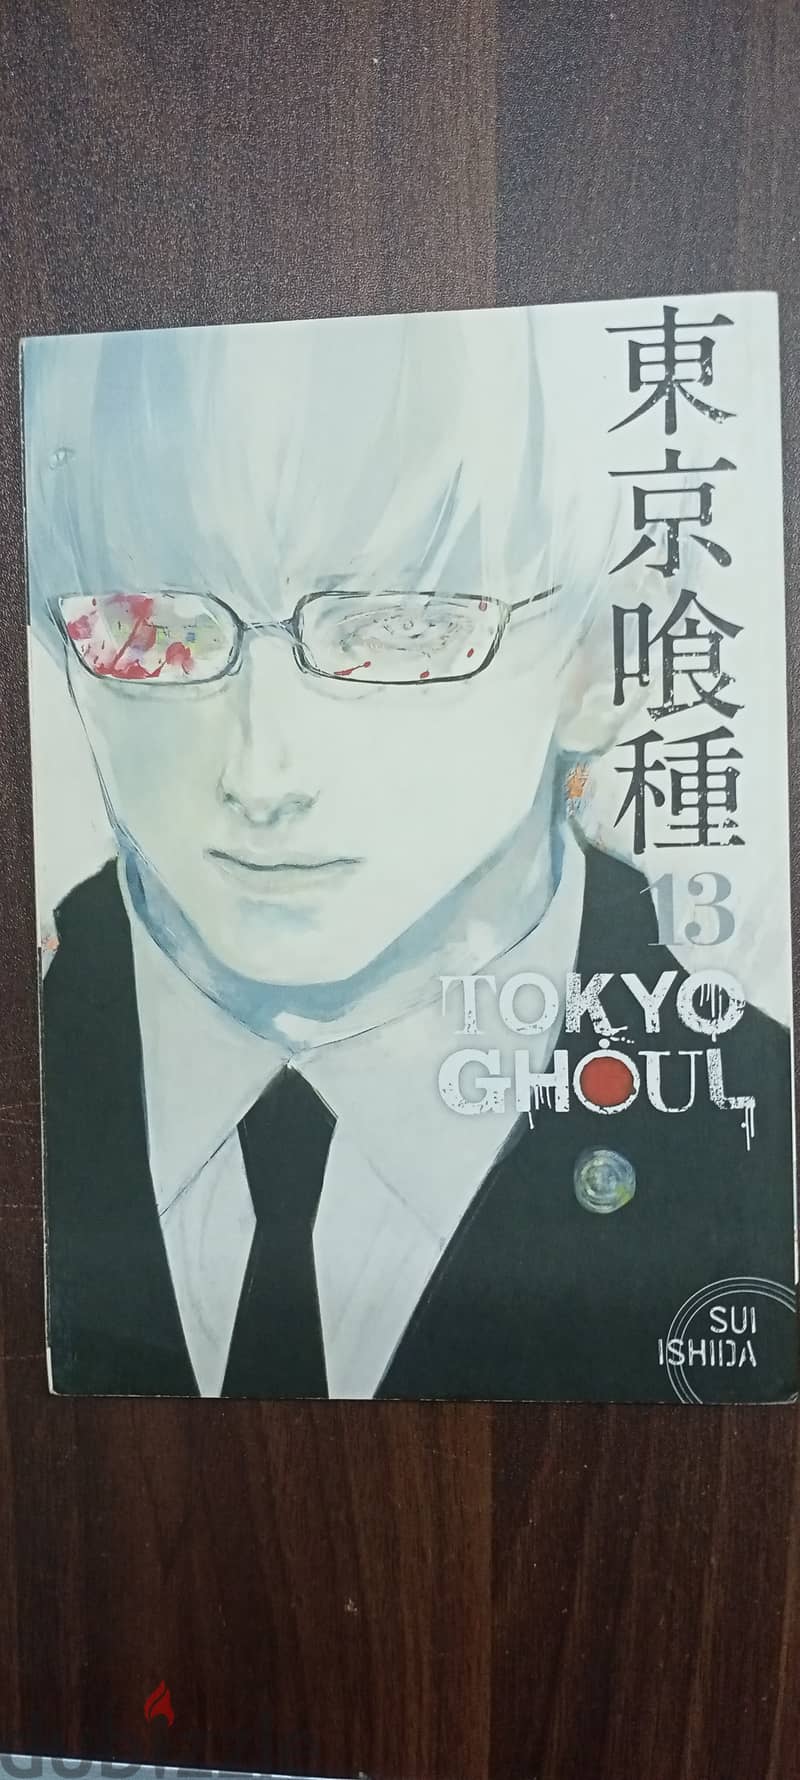 Tokyo ghoul manga 6